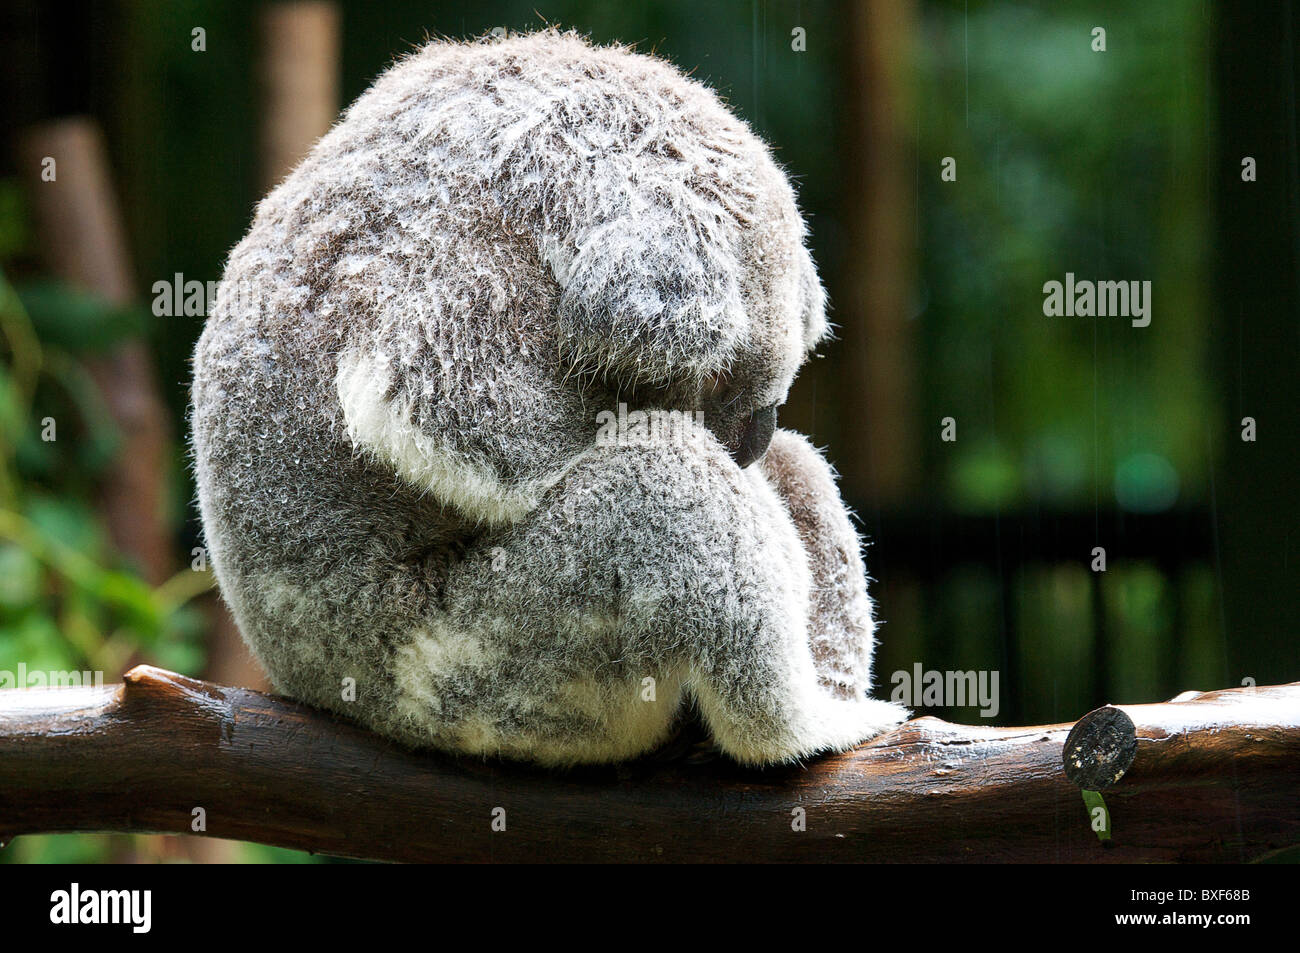 A very wet Koala sleeps in the rain shower. Stock Photo